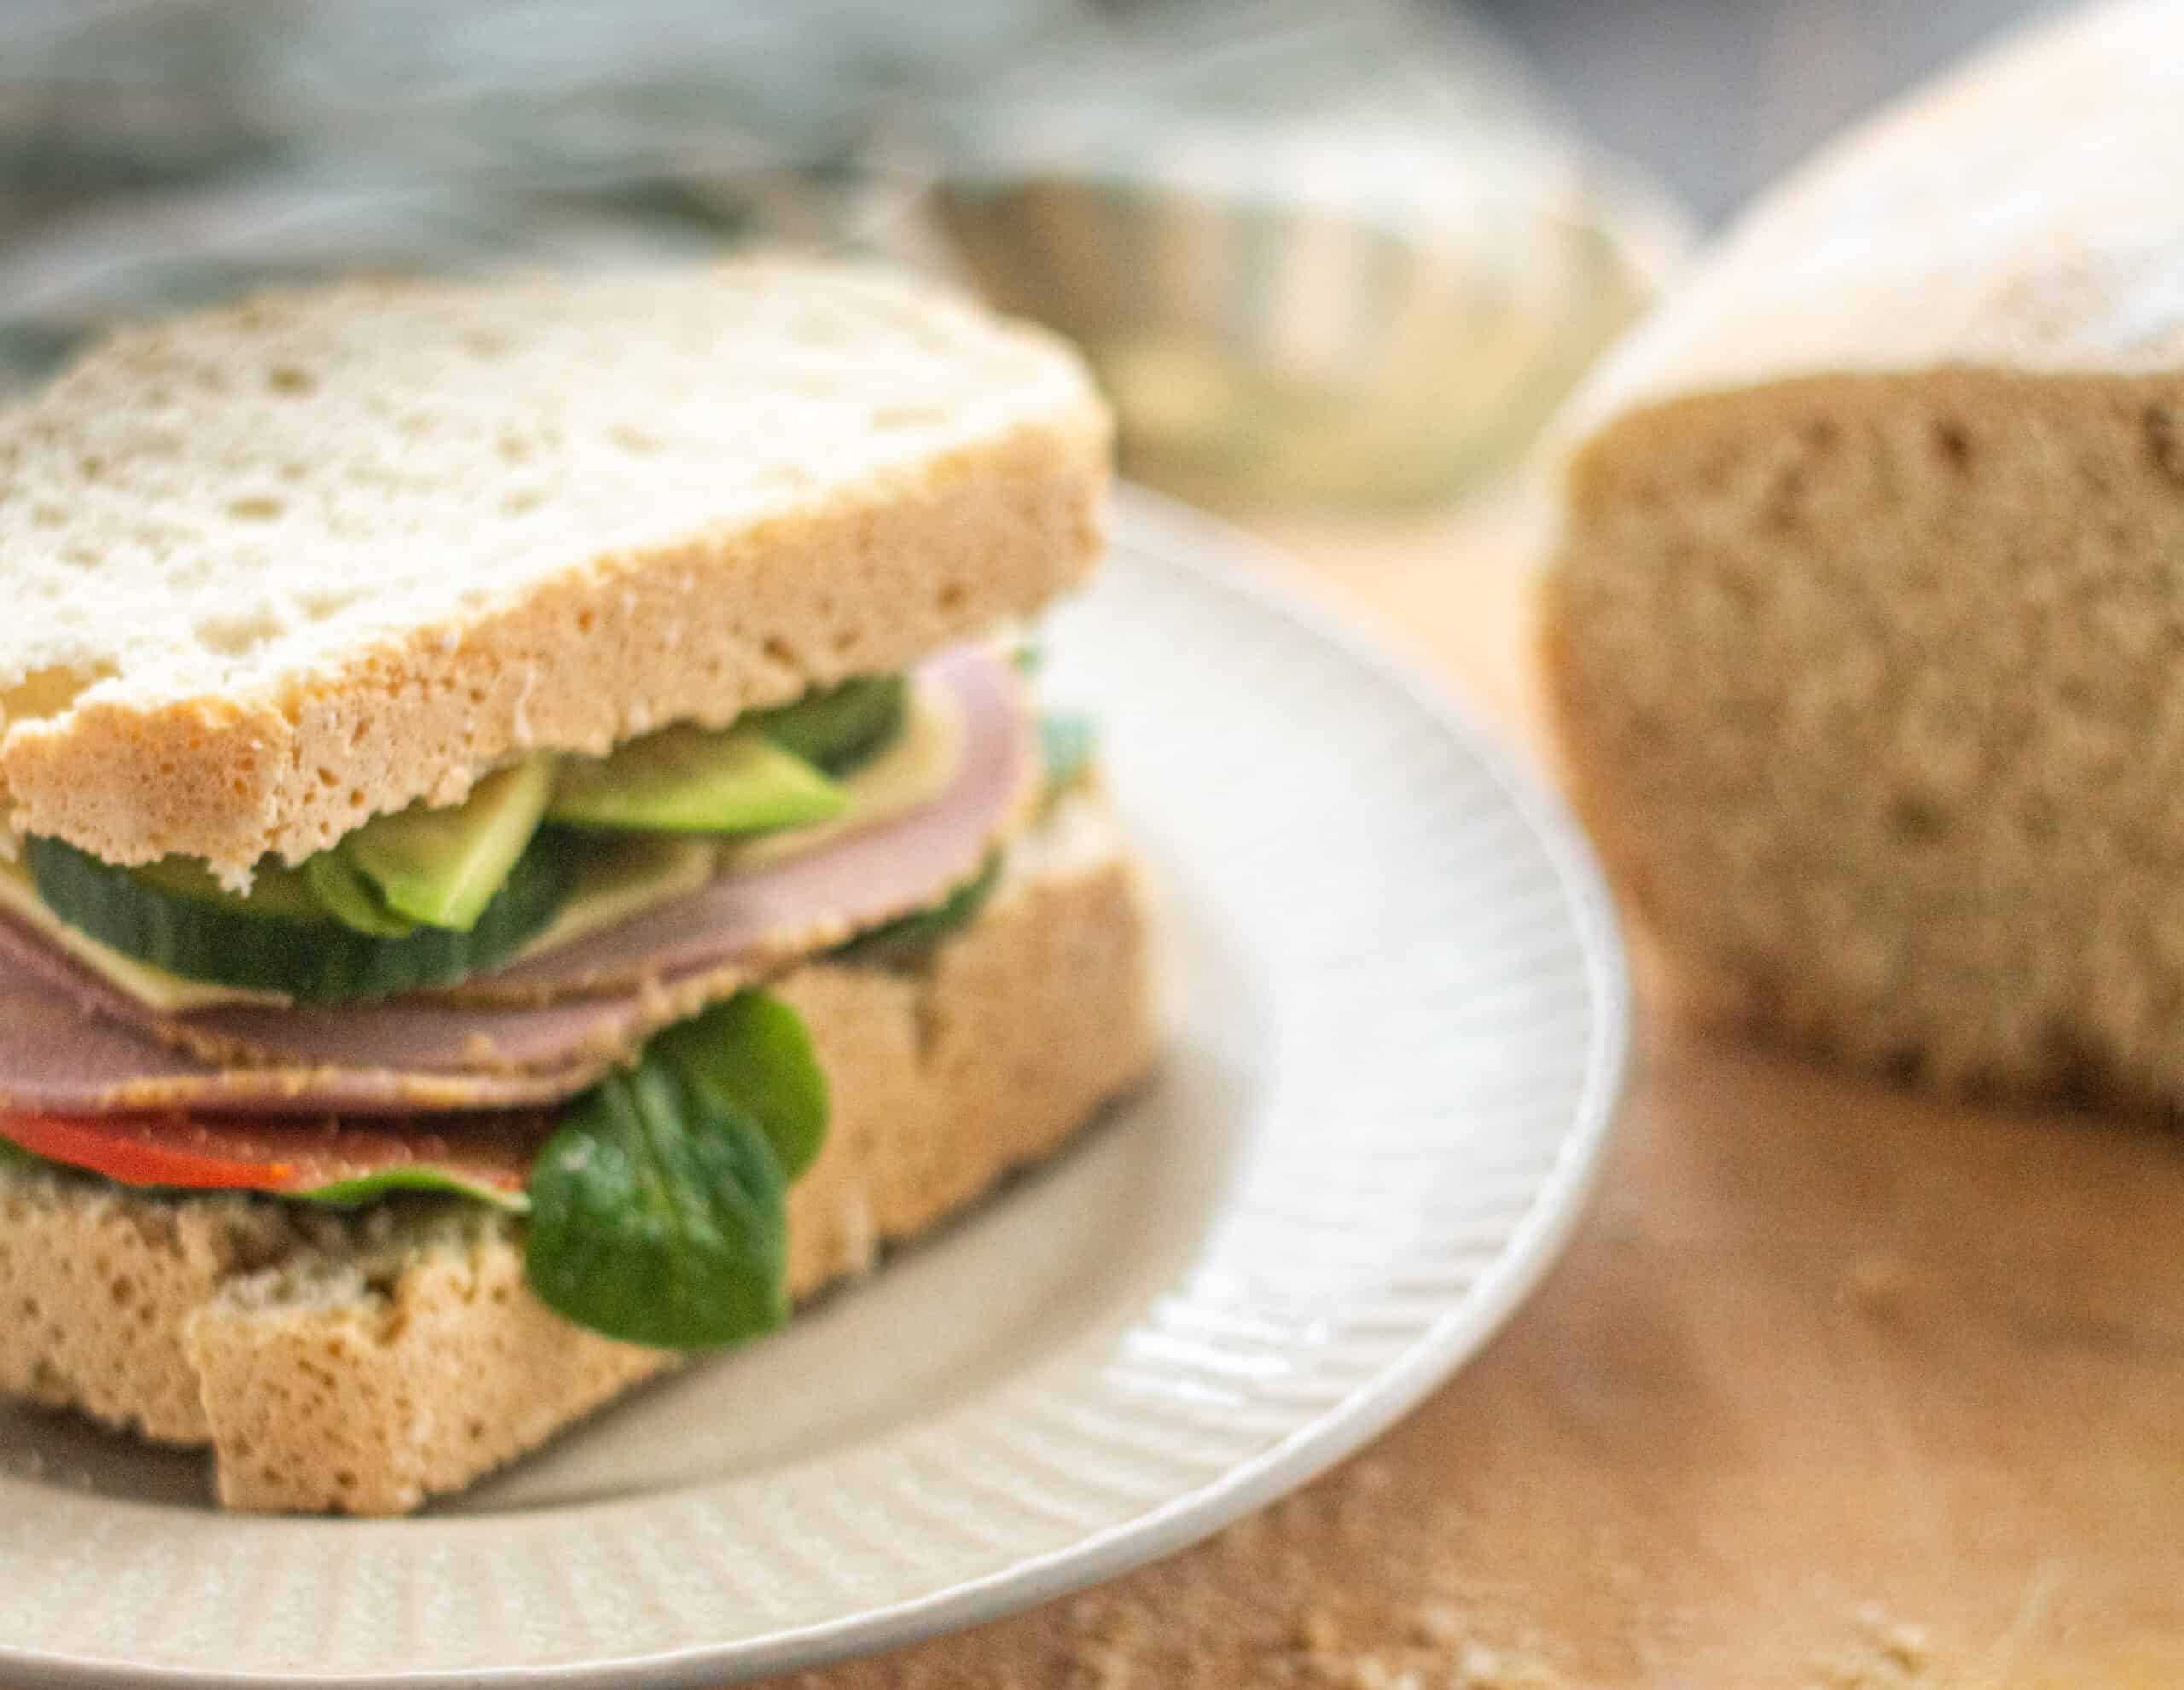 A sandwich made with sandwich bread